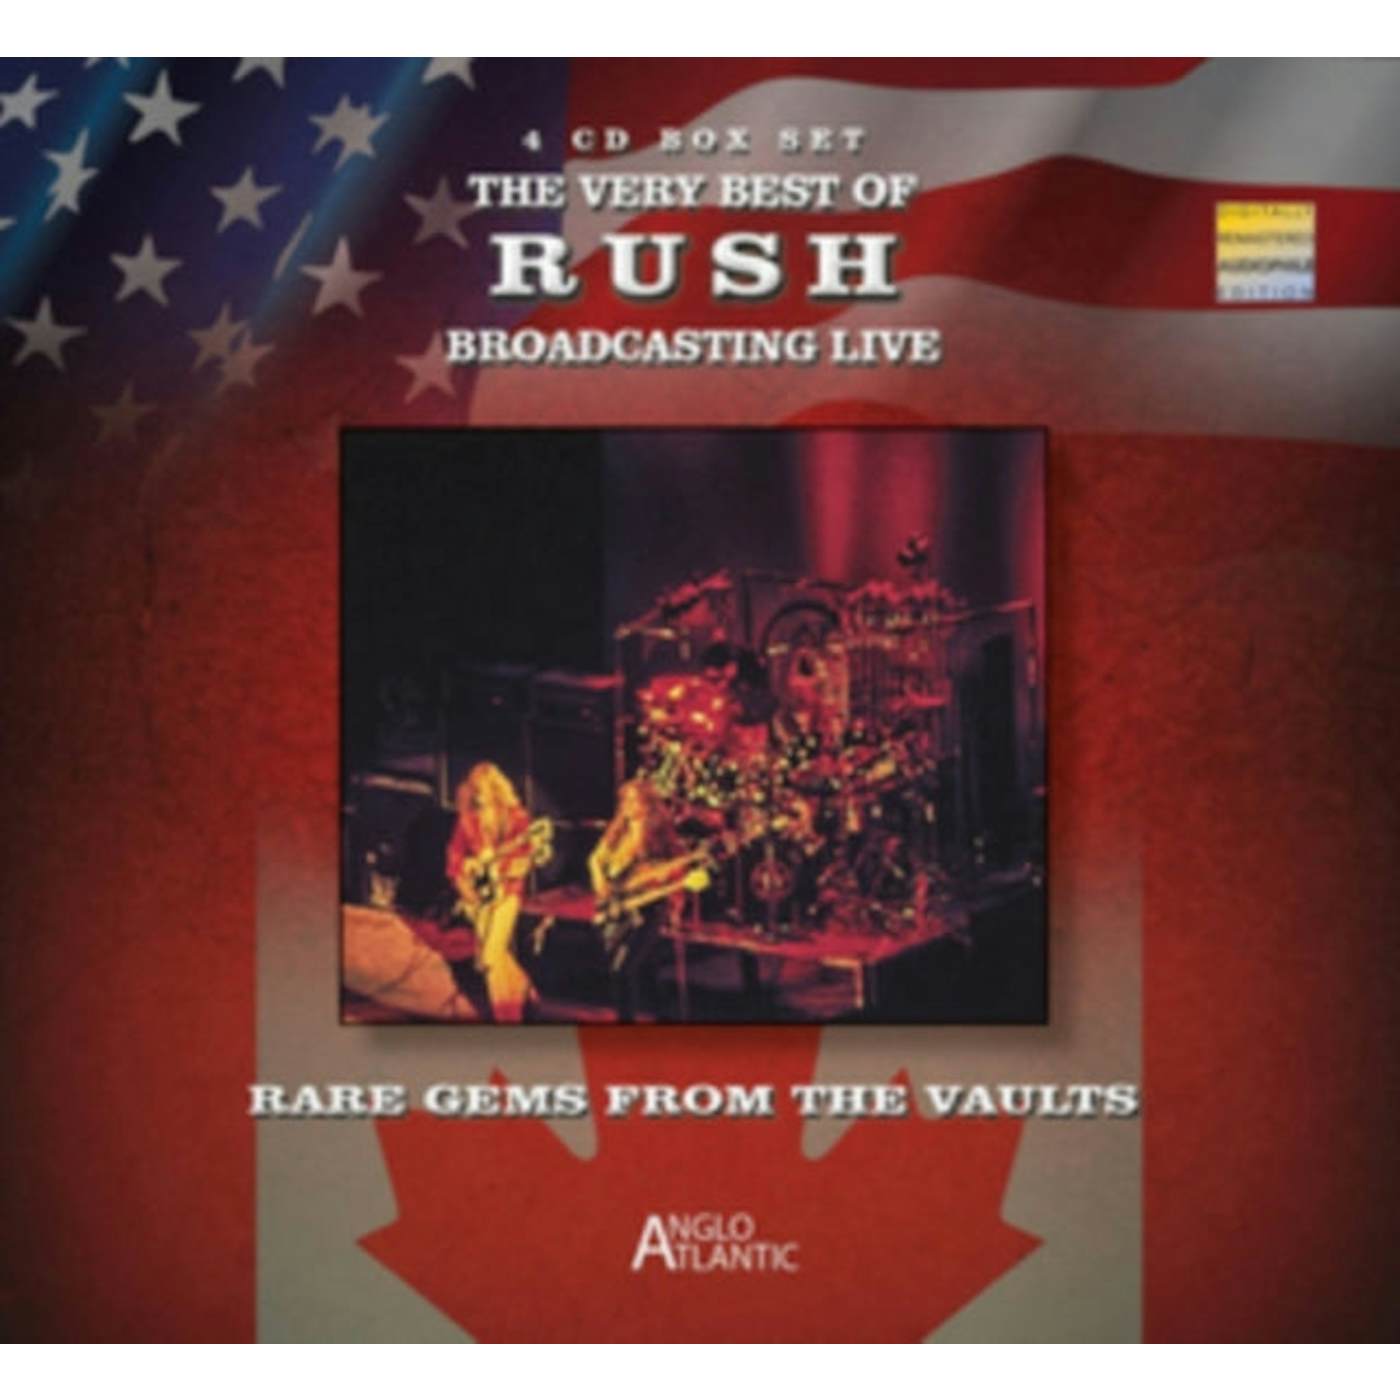 Rush CD - The Very Best Of Rush - Broadcasting Live